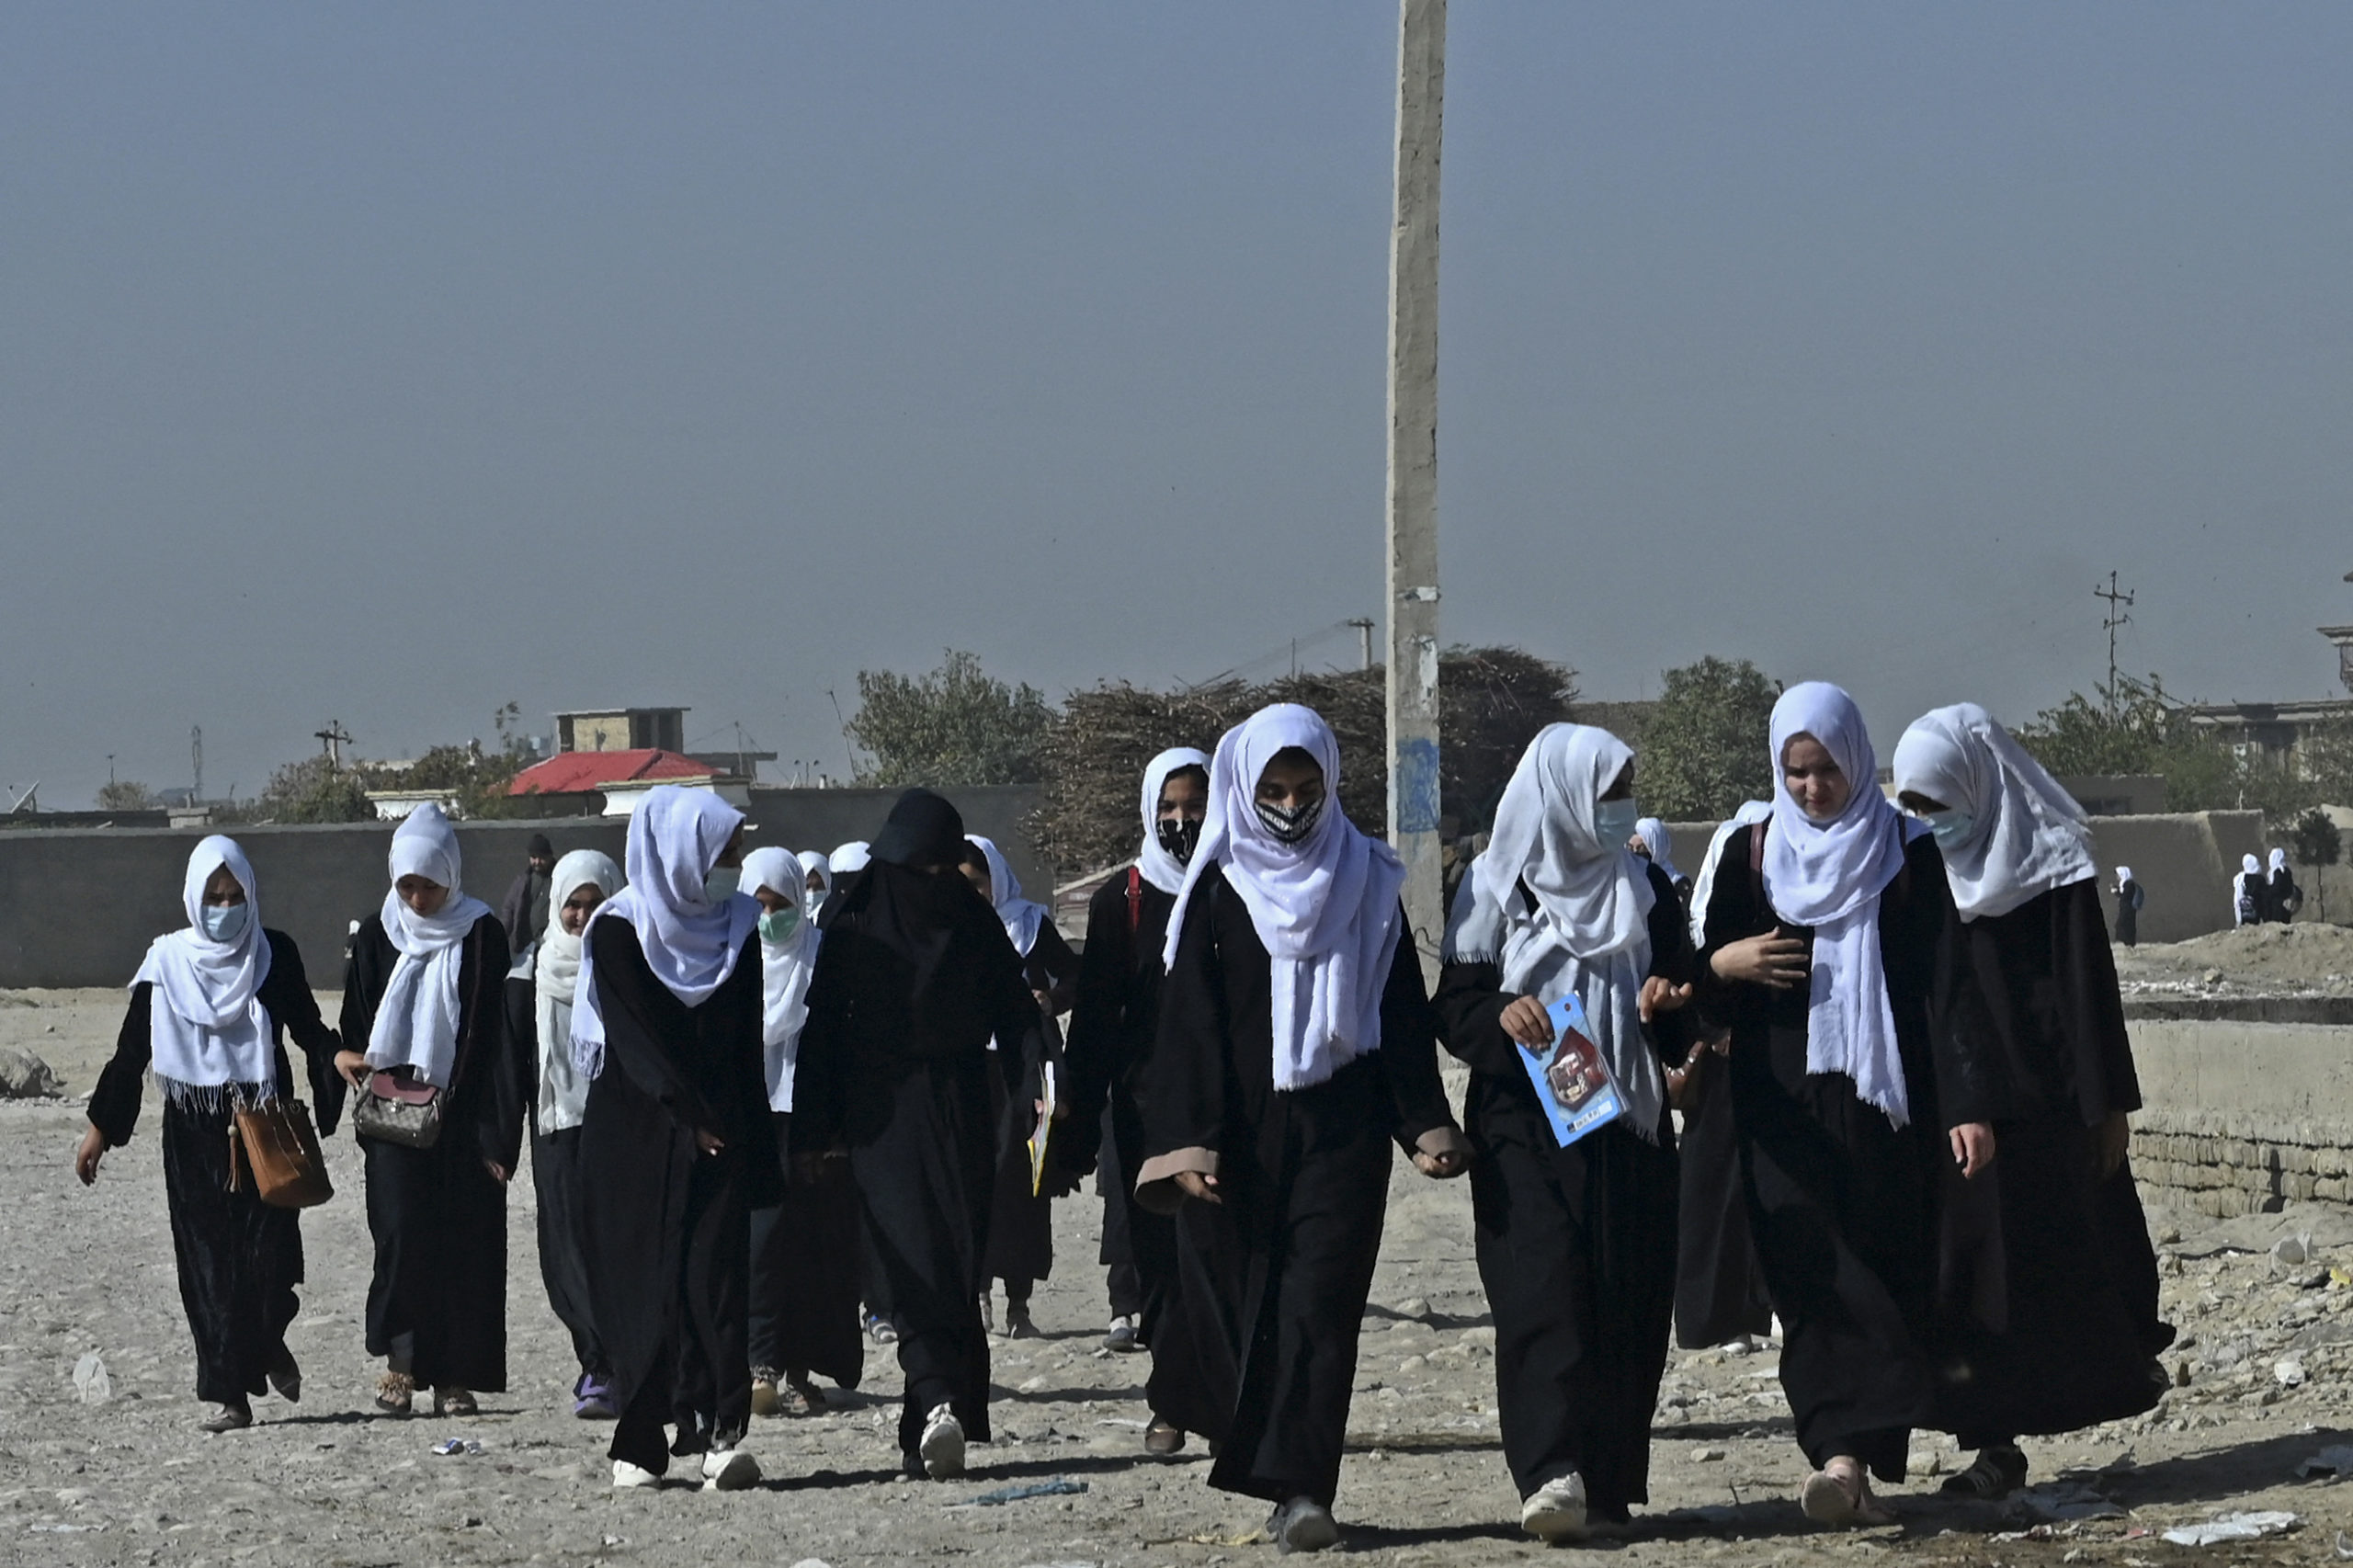 Afghan schoolgirls walk along a path as they return from school in Mazar-i-Sharif on October 30, 2021. (Photo by WAKIL KOHSAR / AFP) (Photo by WAKIL KOHSAR/AFP via Getty Images)